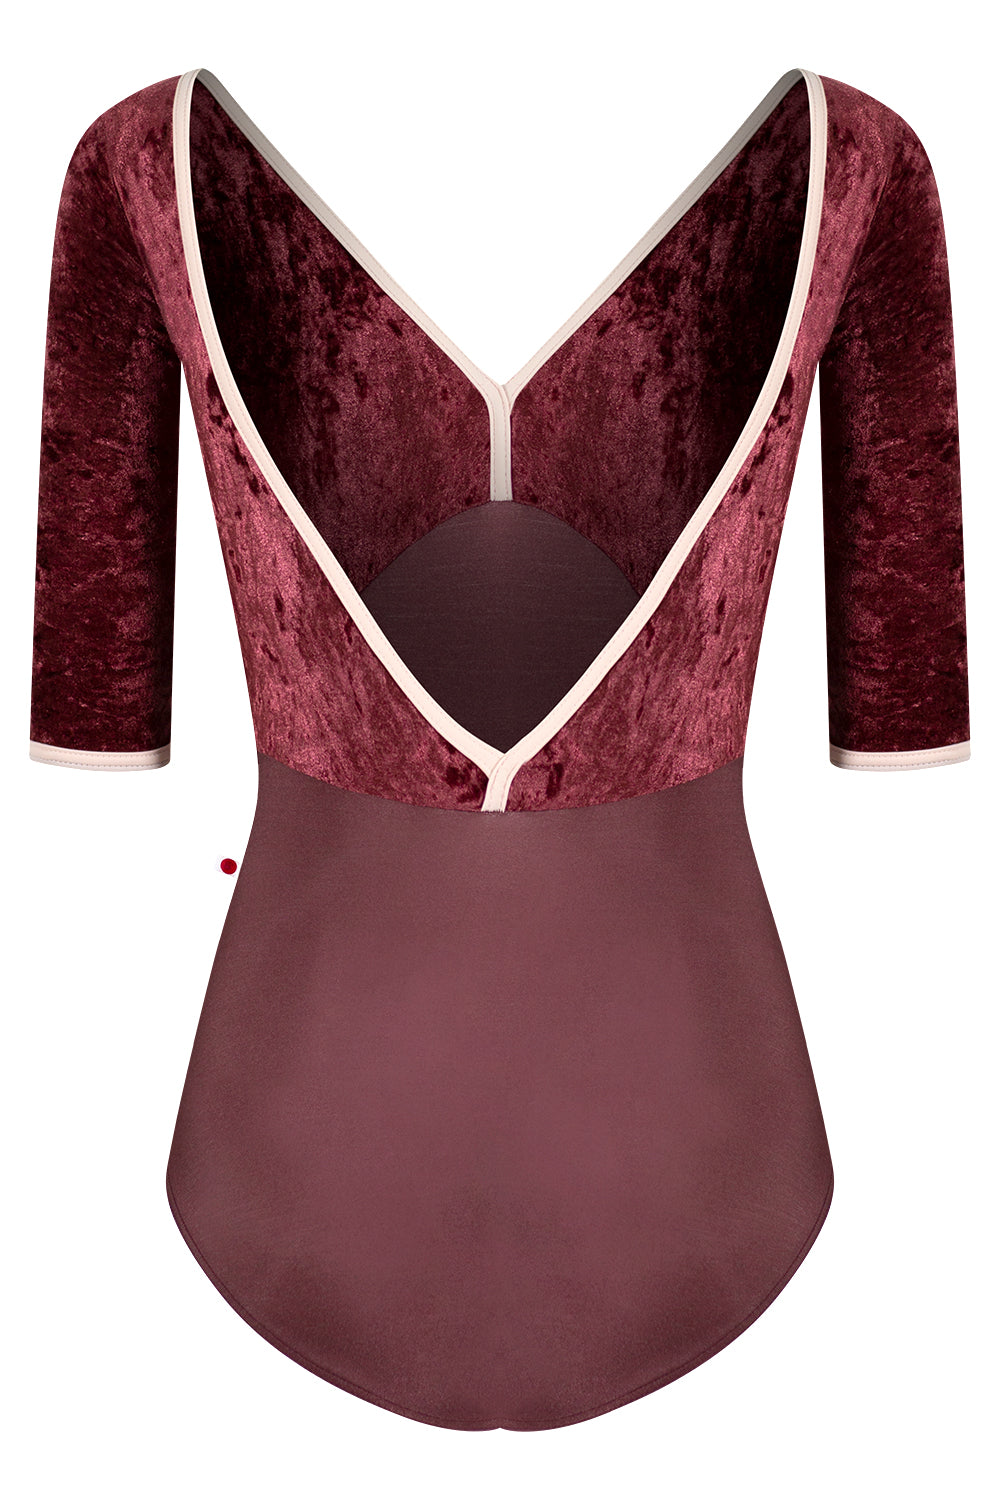 Alicia leotard in N-Phoenix body color with CV-Garnet top color & Half Sleeves and CV-Misty Rose trim color